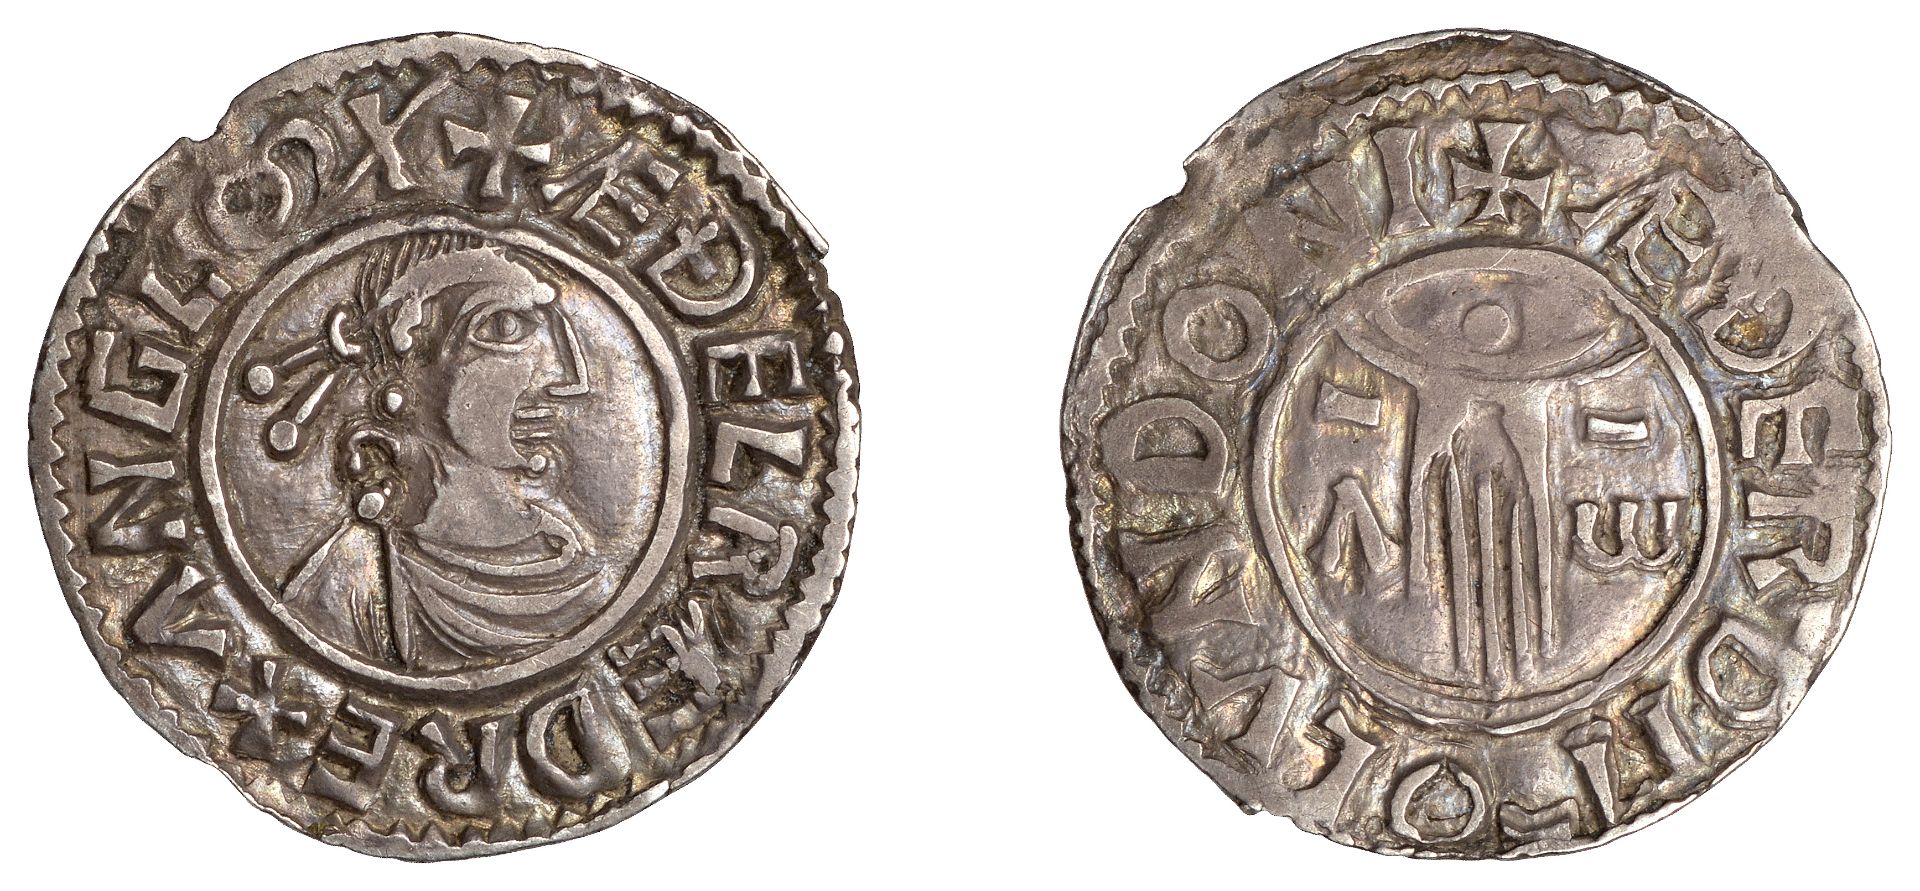 Ã†thelred II (978-1016), Penny, First Hand type [BMC iia], London, Ã†thelred, Ã¦derd m-o lvndon...